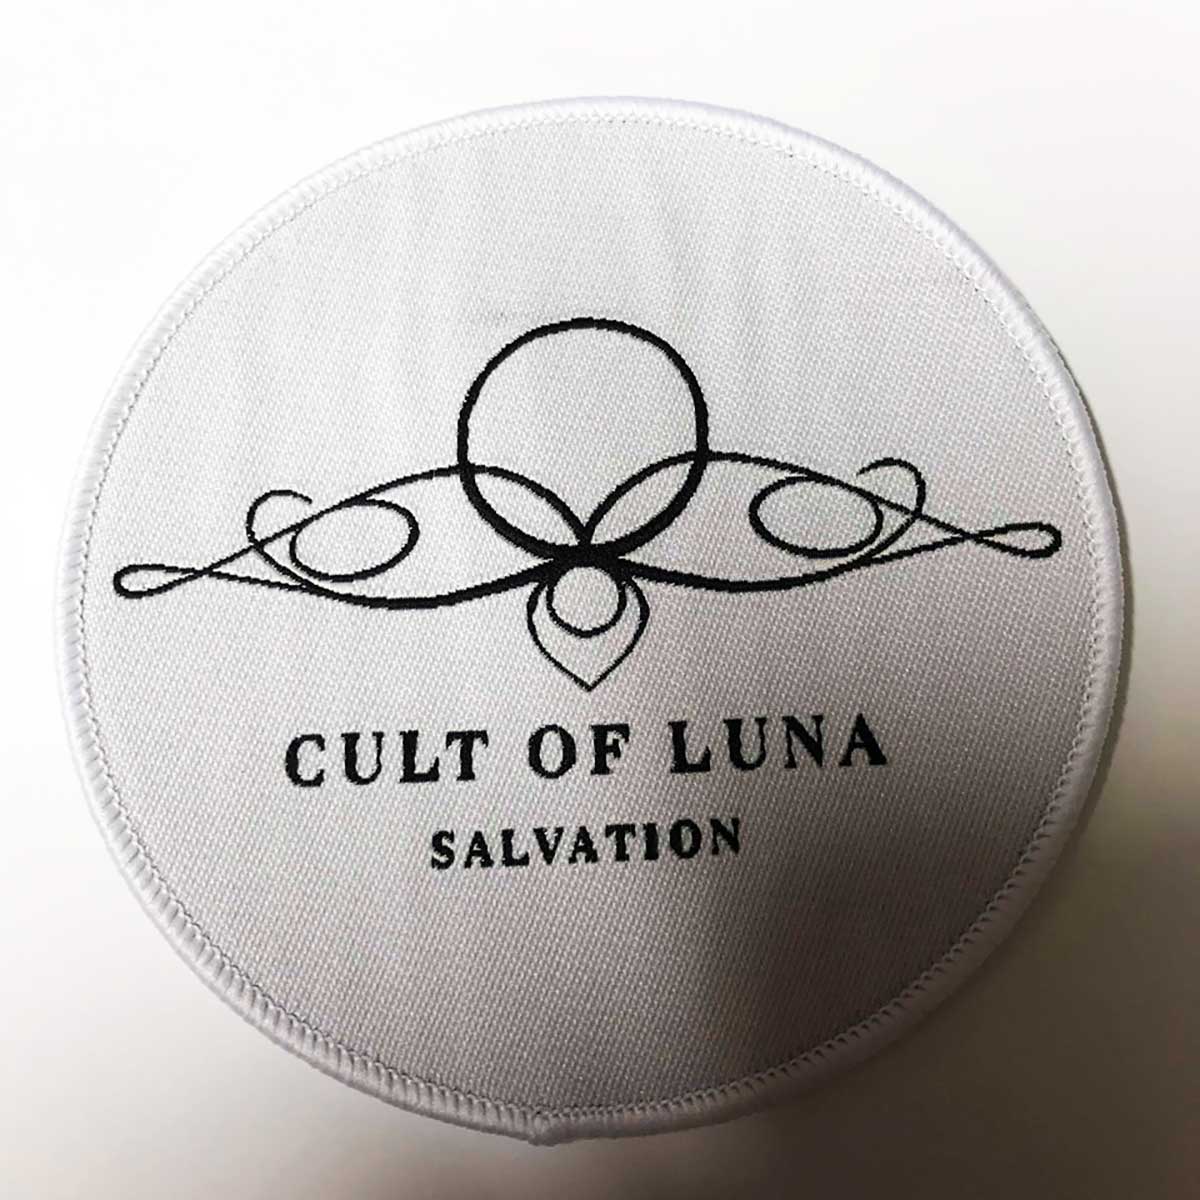 Cult Of Luna "Salvation" Patch